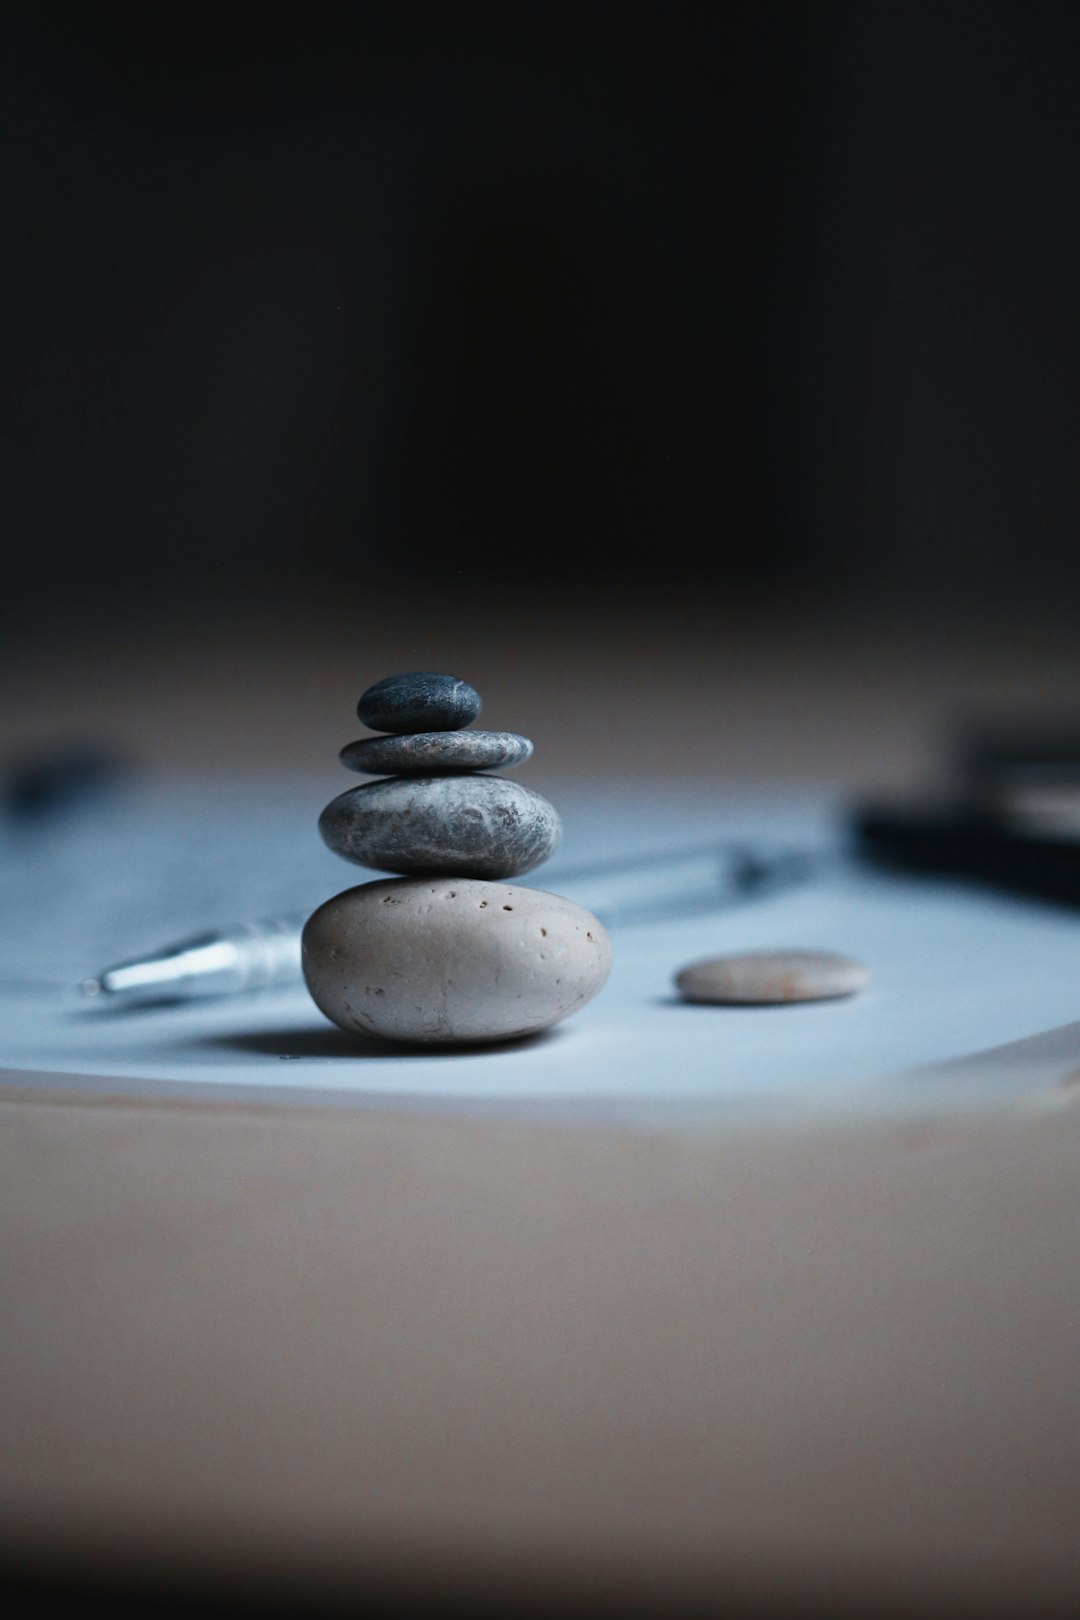  shallow focus photo of balance stones weighing balance